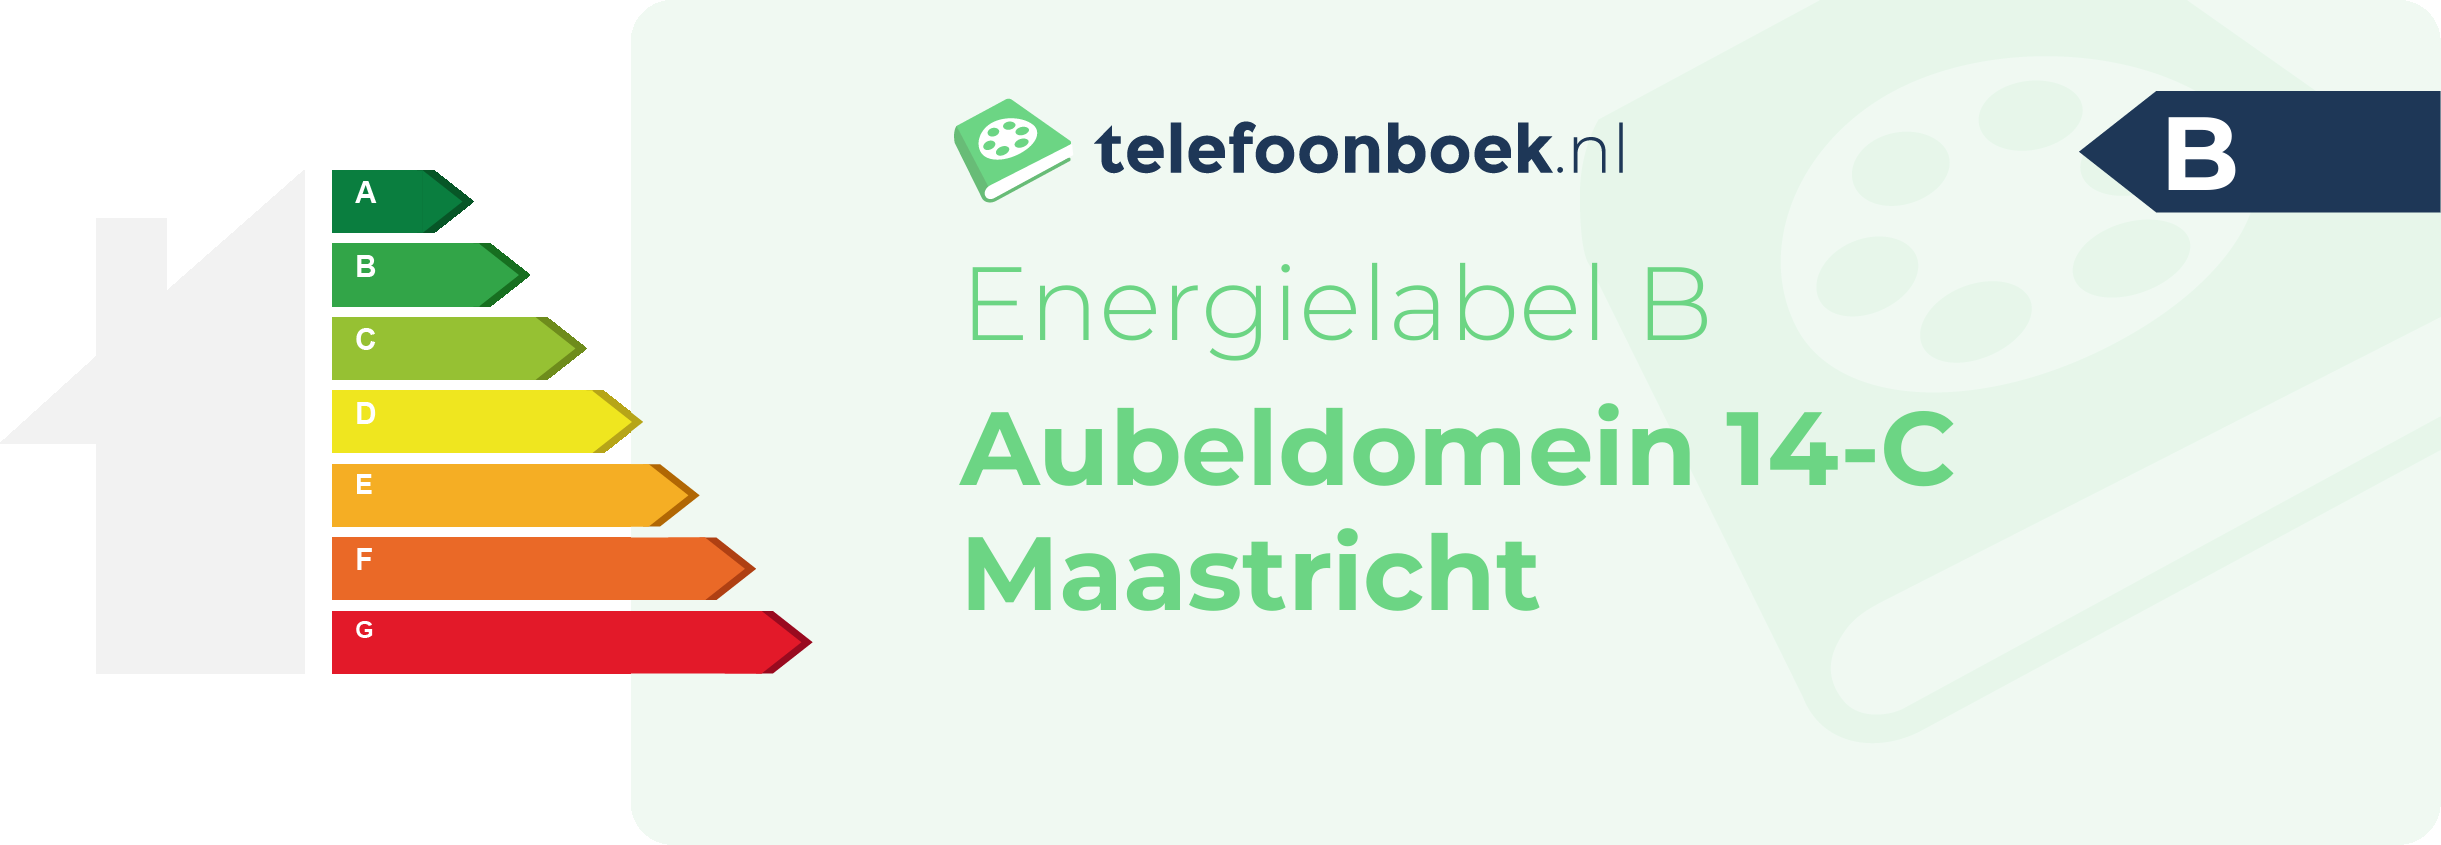 Energielabel Aubeldomein 14-C Maastricht